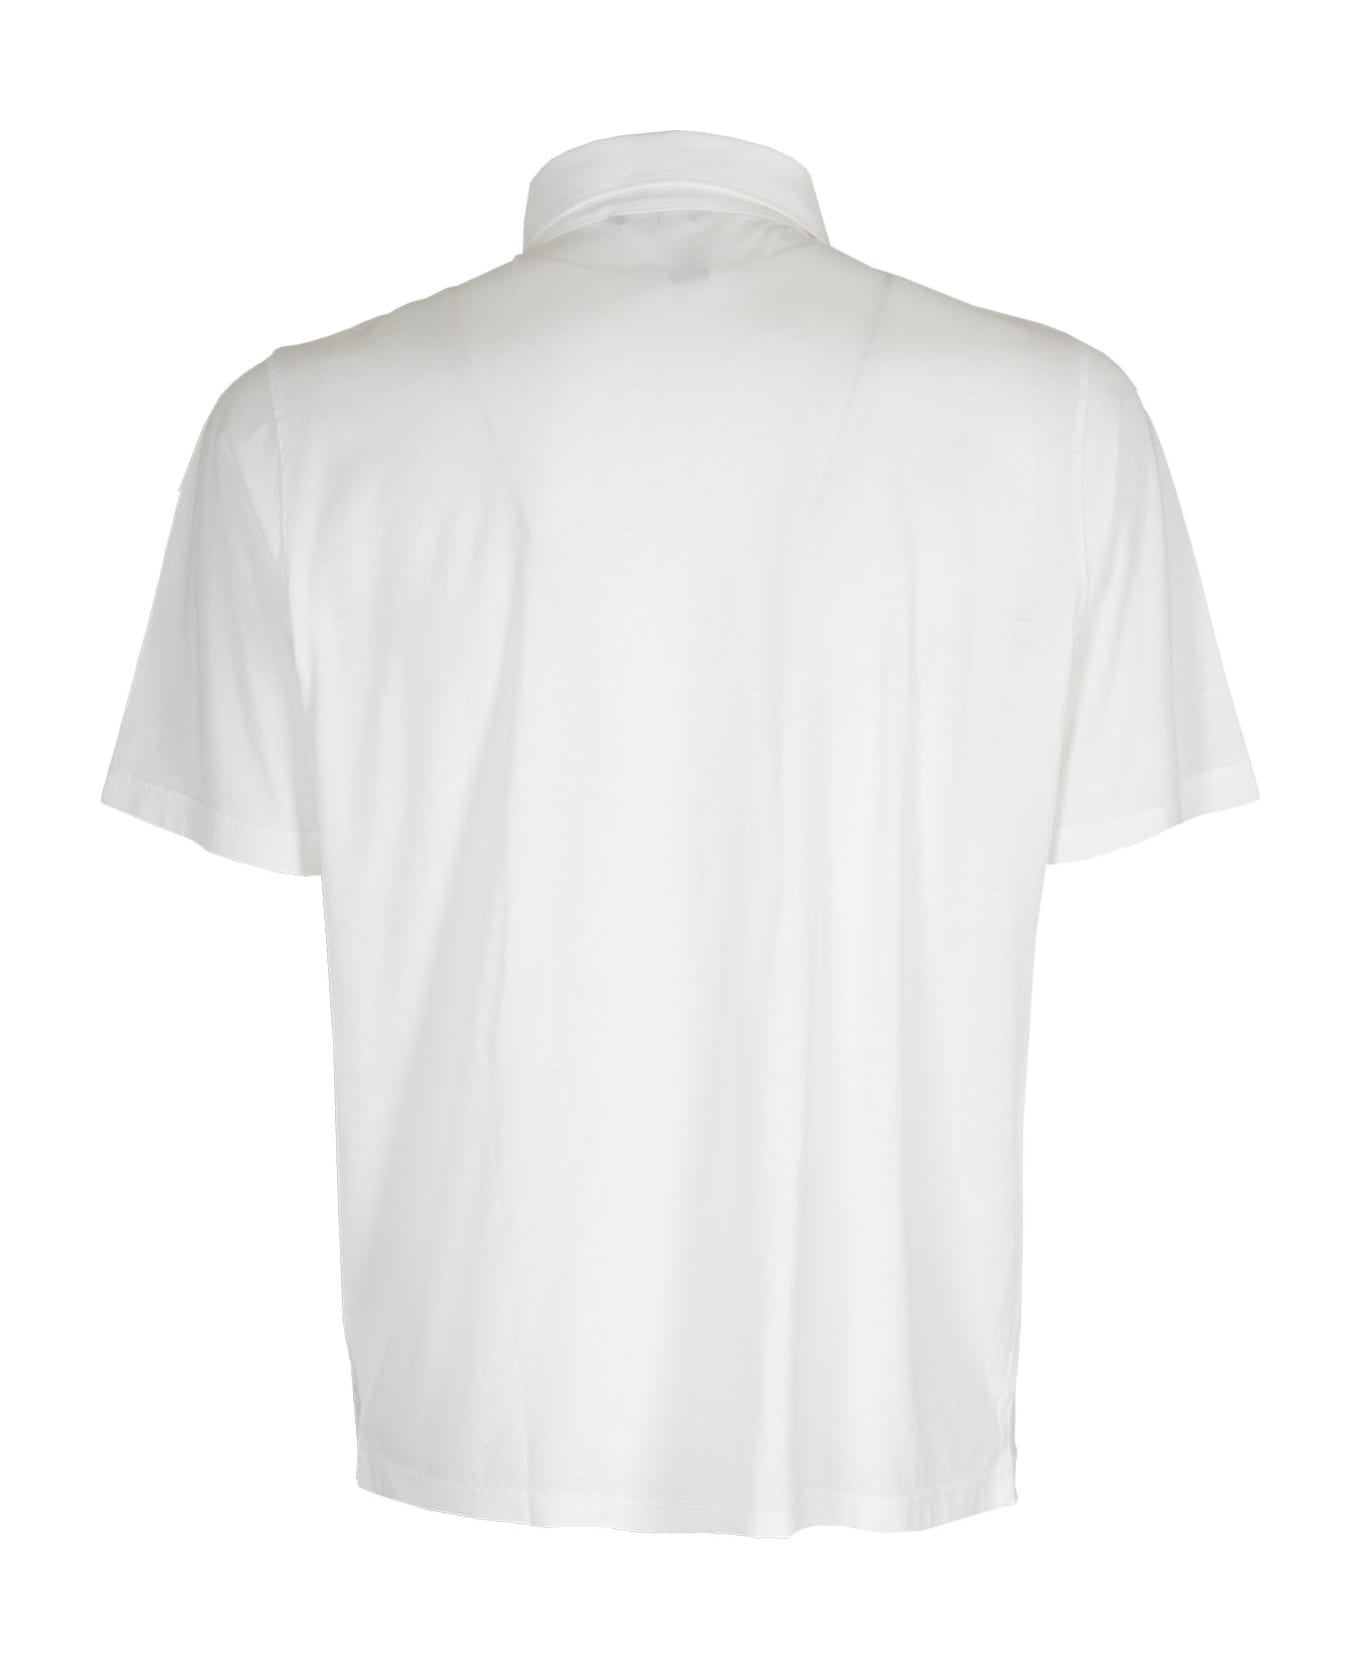 Kired M.corta Jersey Crepe` - Bianco ポロシャツ